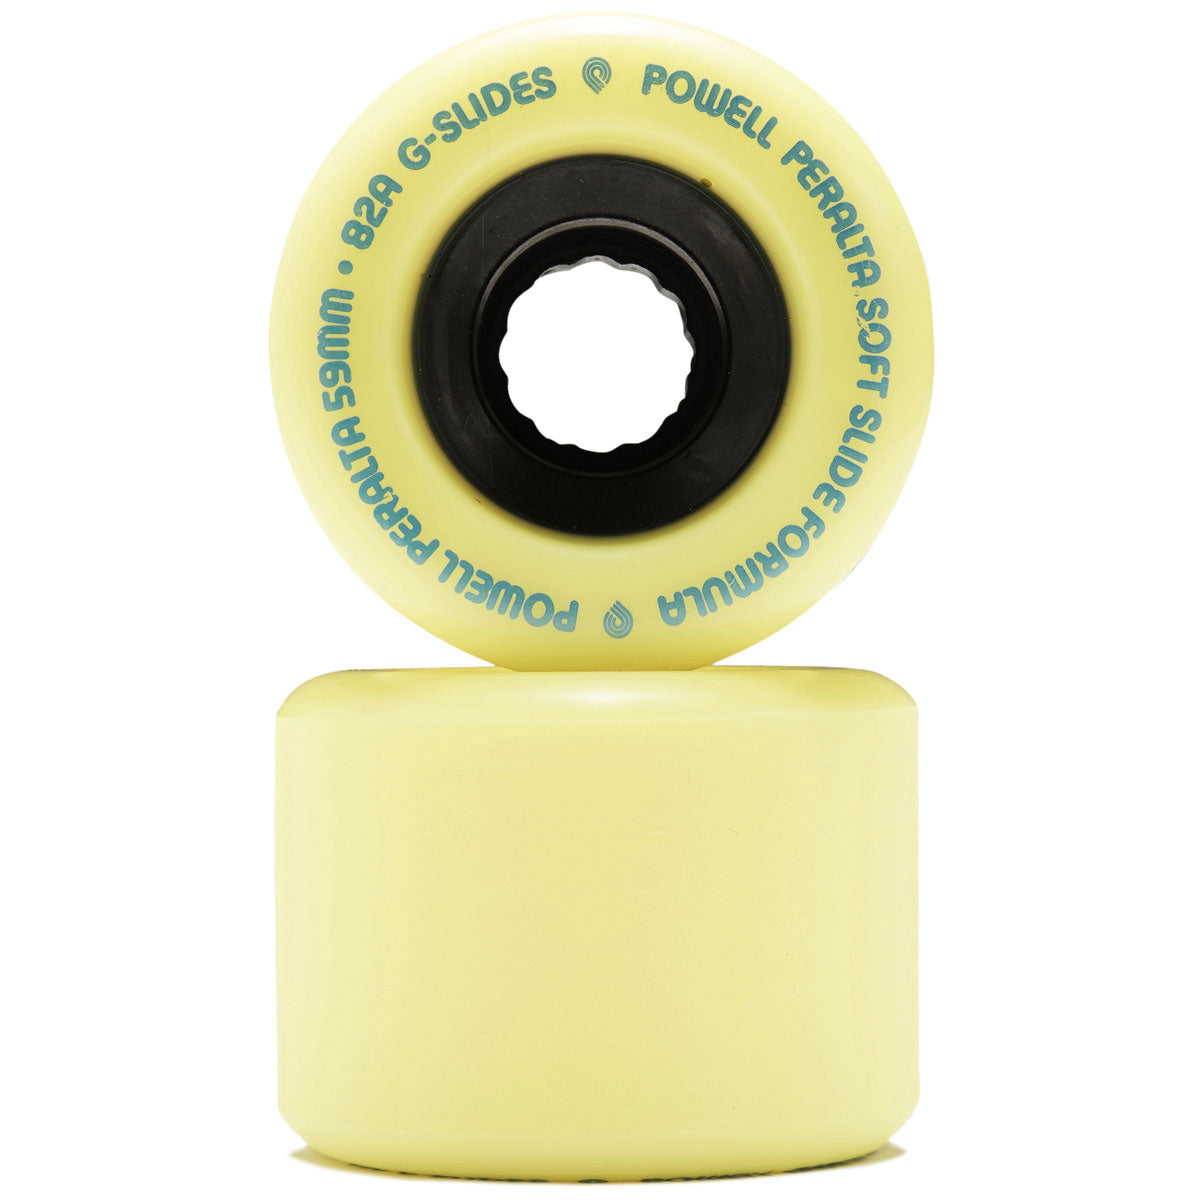 Powell-Peralta G-Slides 82A Longboard Wheels - Yellow - 59mm image 2